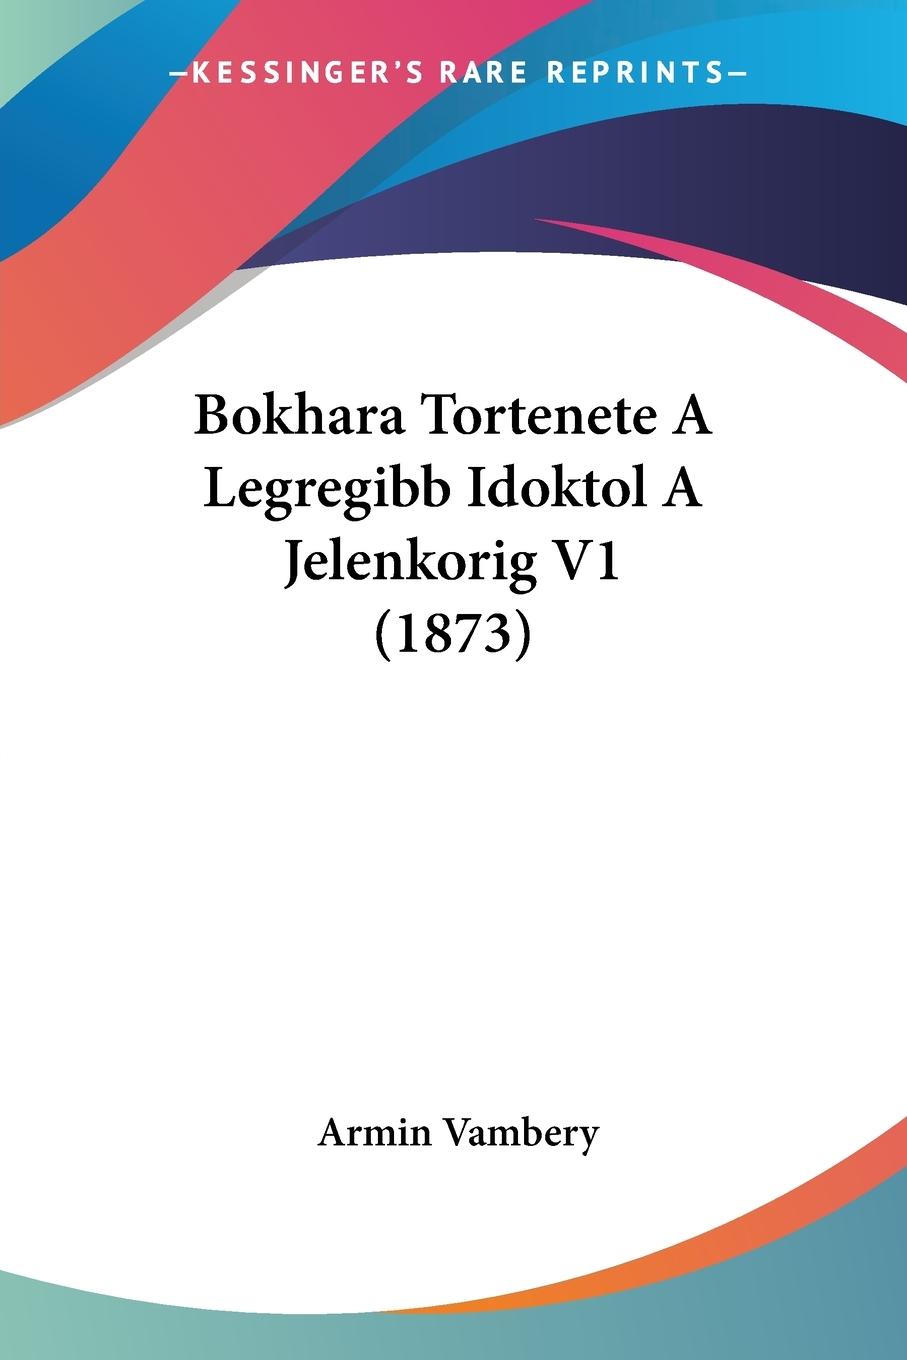 Bokhara Tortenete A Legregibb Idoktol A Jelenkorig V1 (1873) - Vambery, Armin